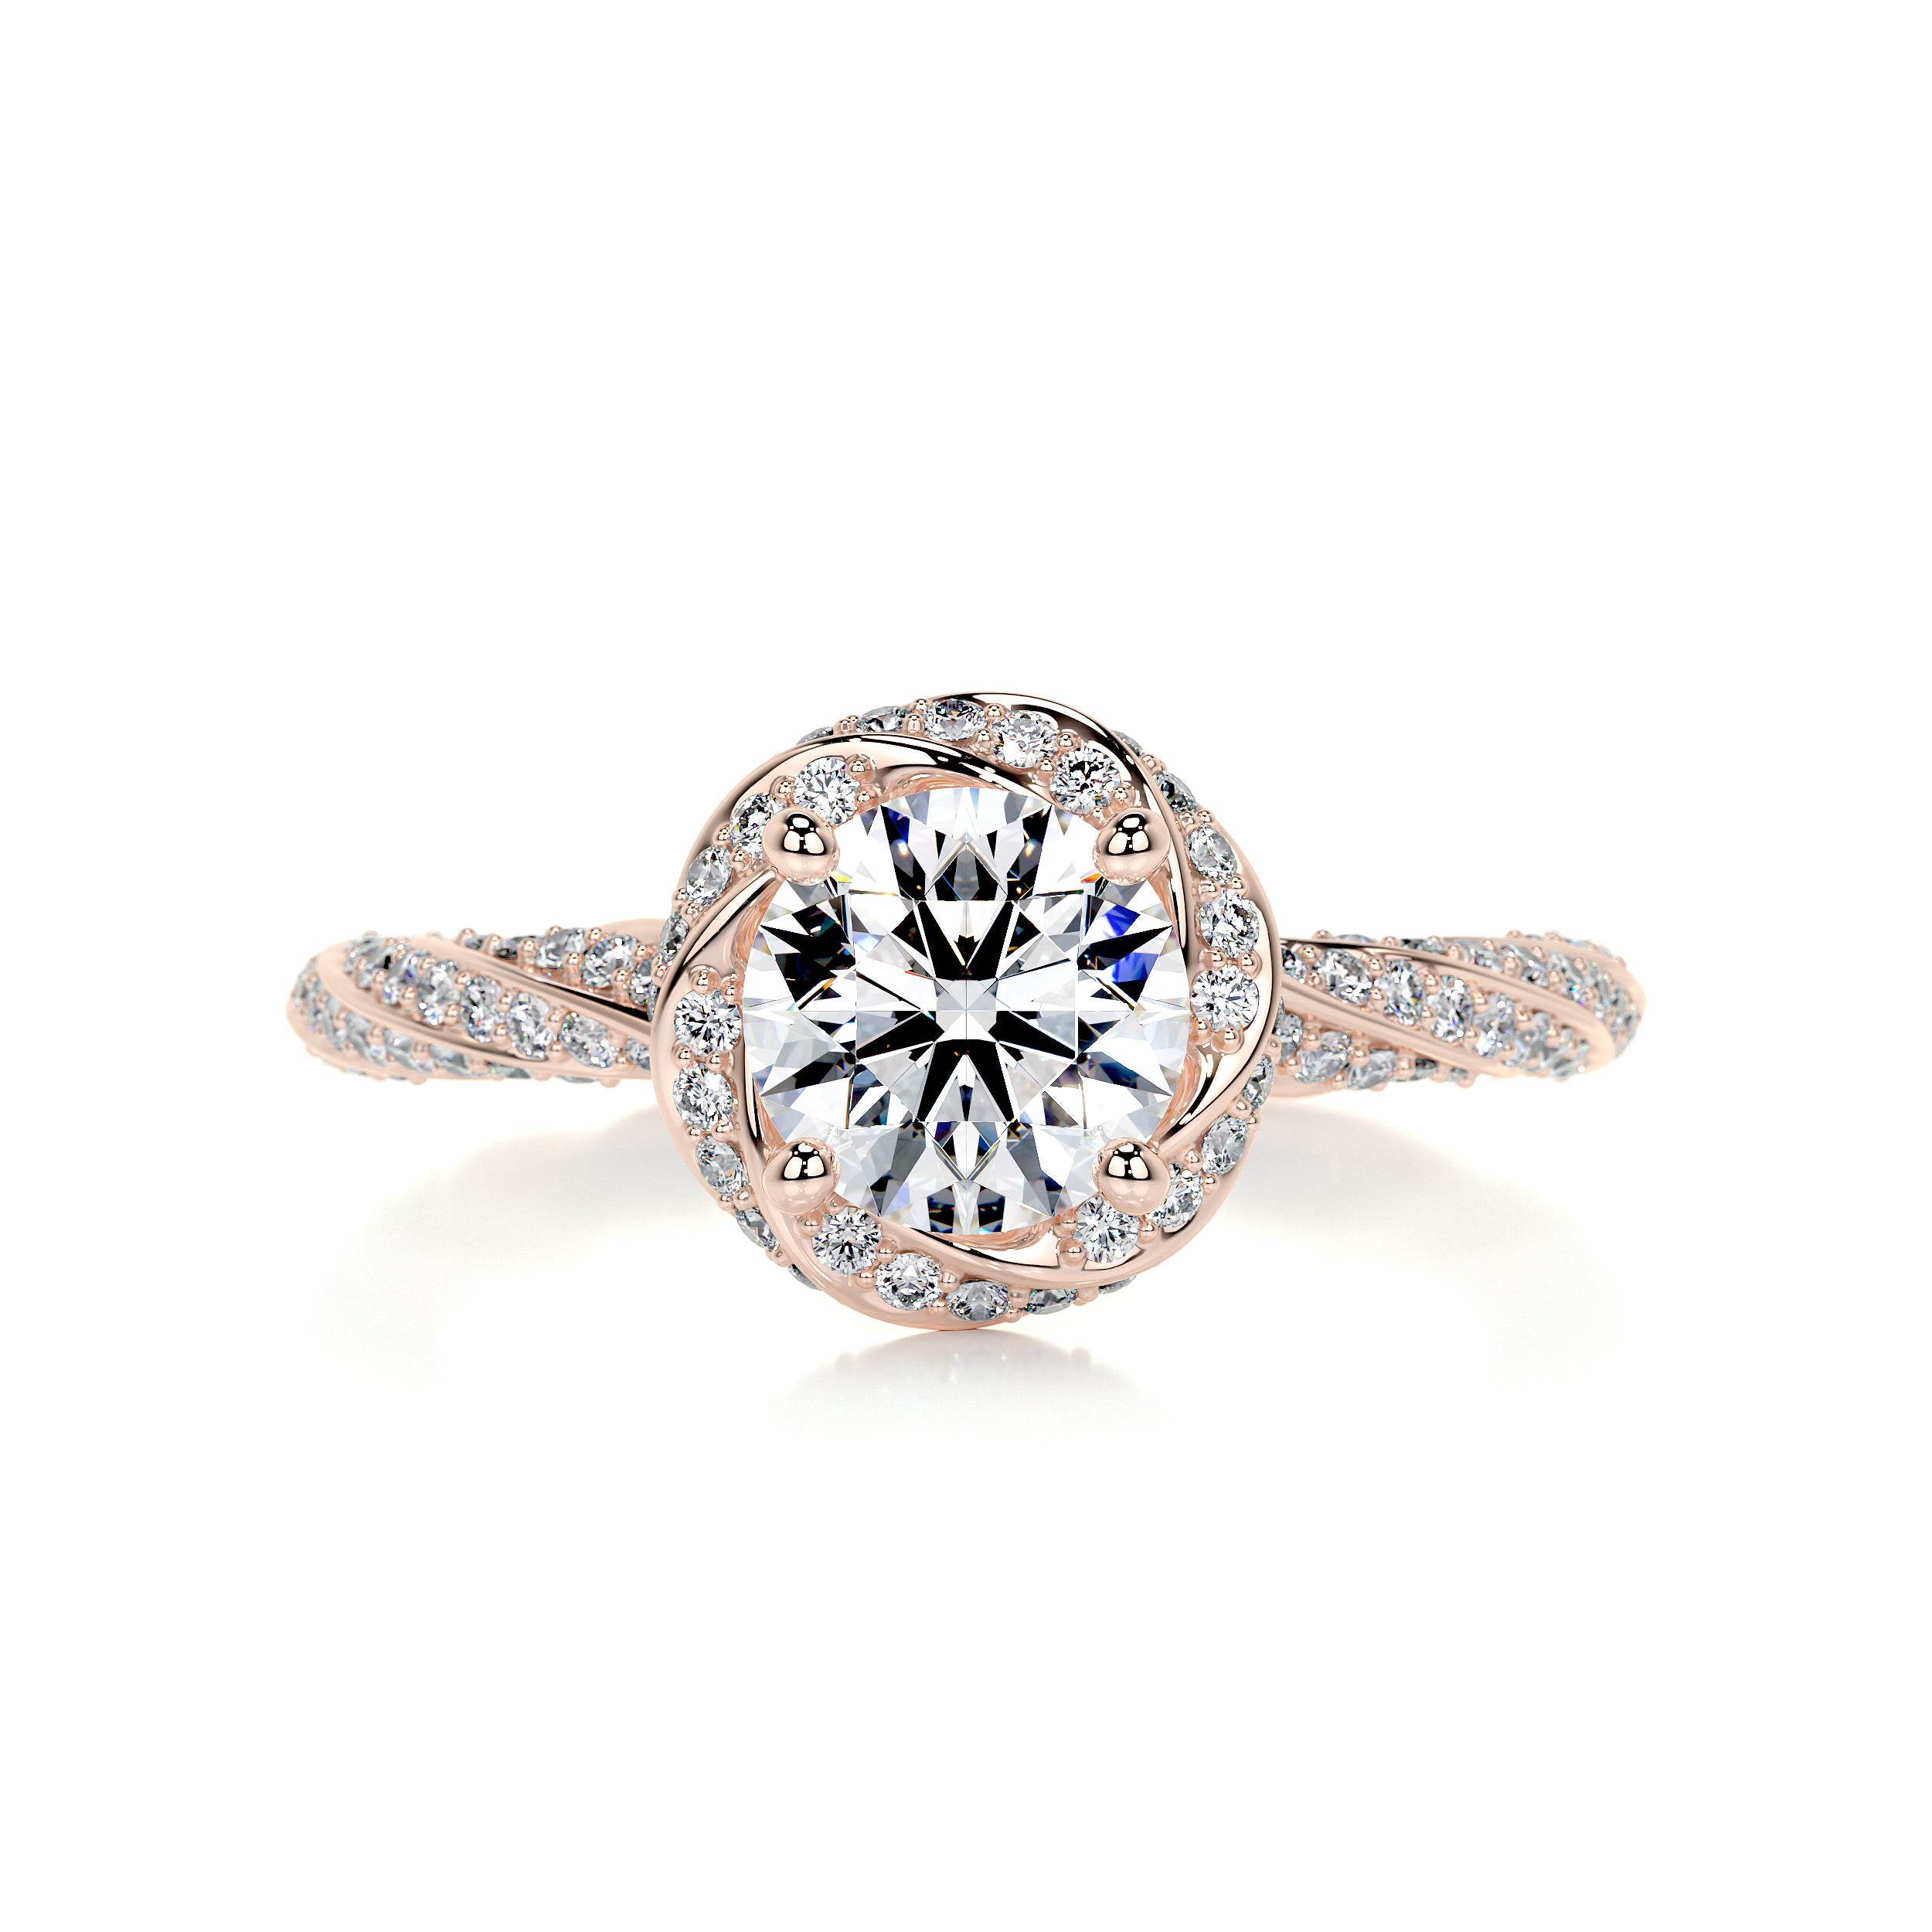 Joanne Diamond Engagement Ring   (1.50 Carat) -14K Rose Gold